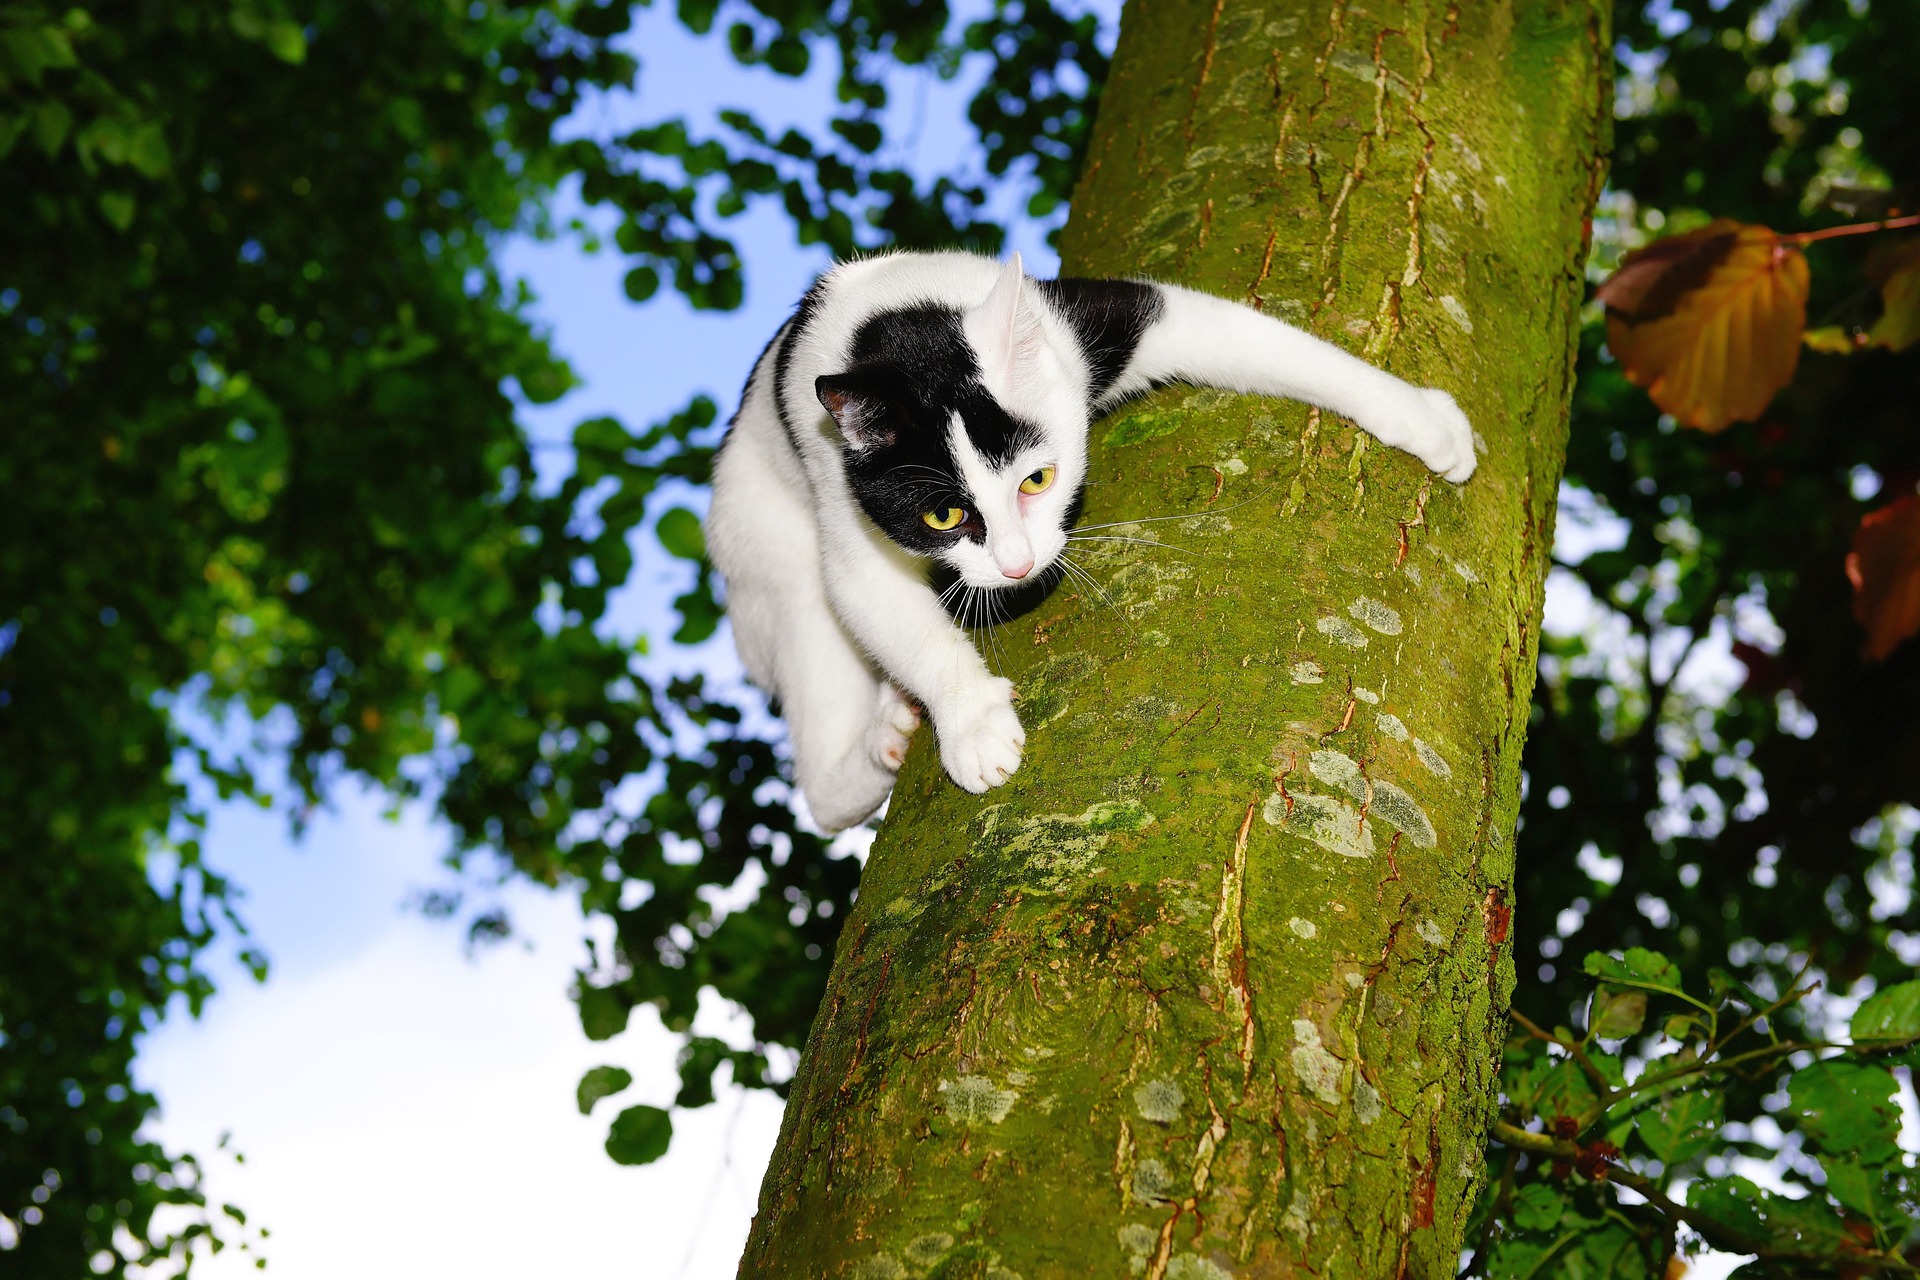 A cat climbing a tree